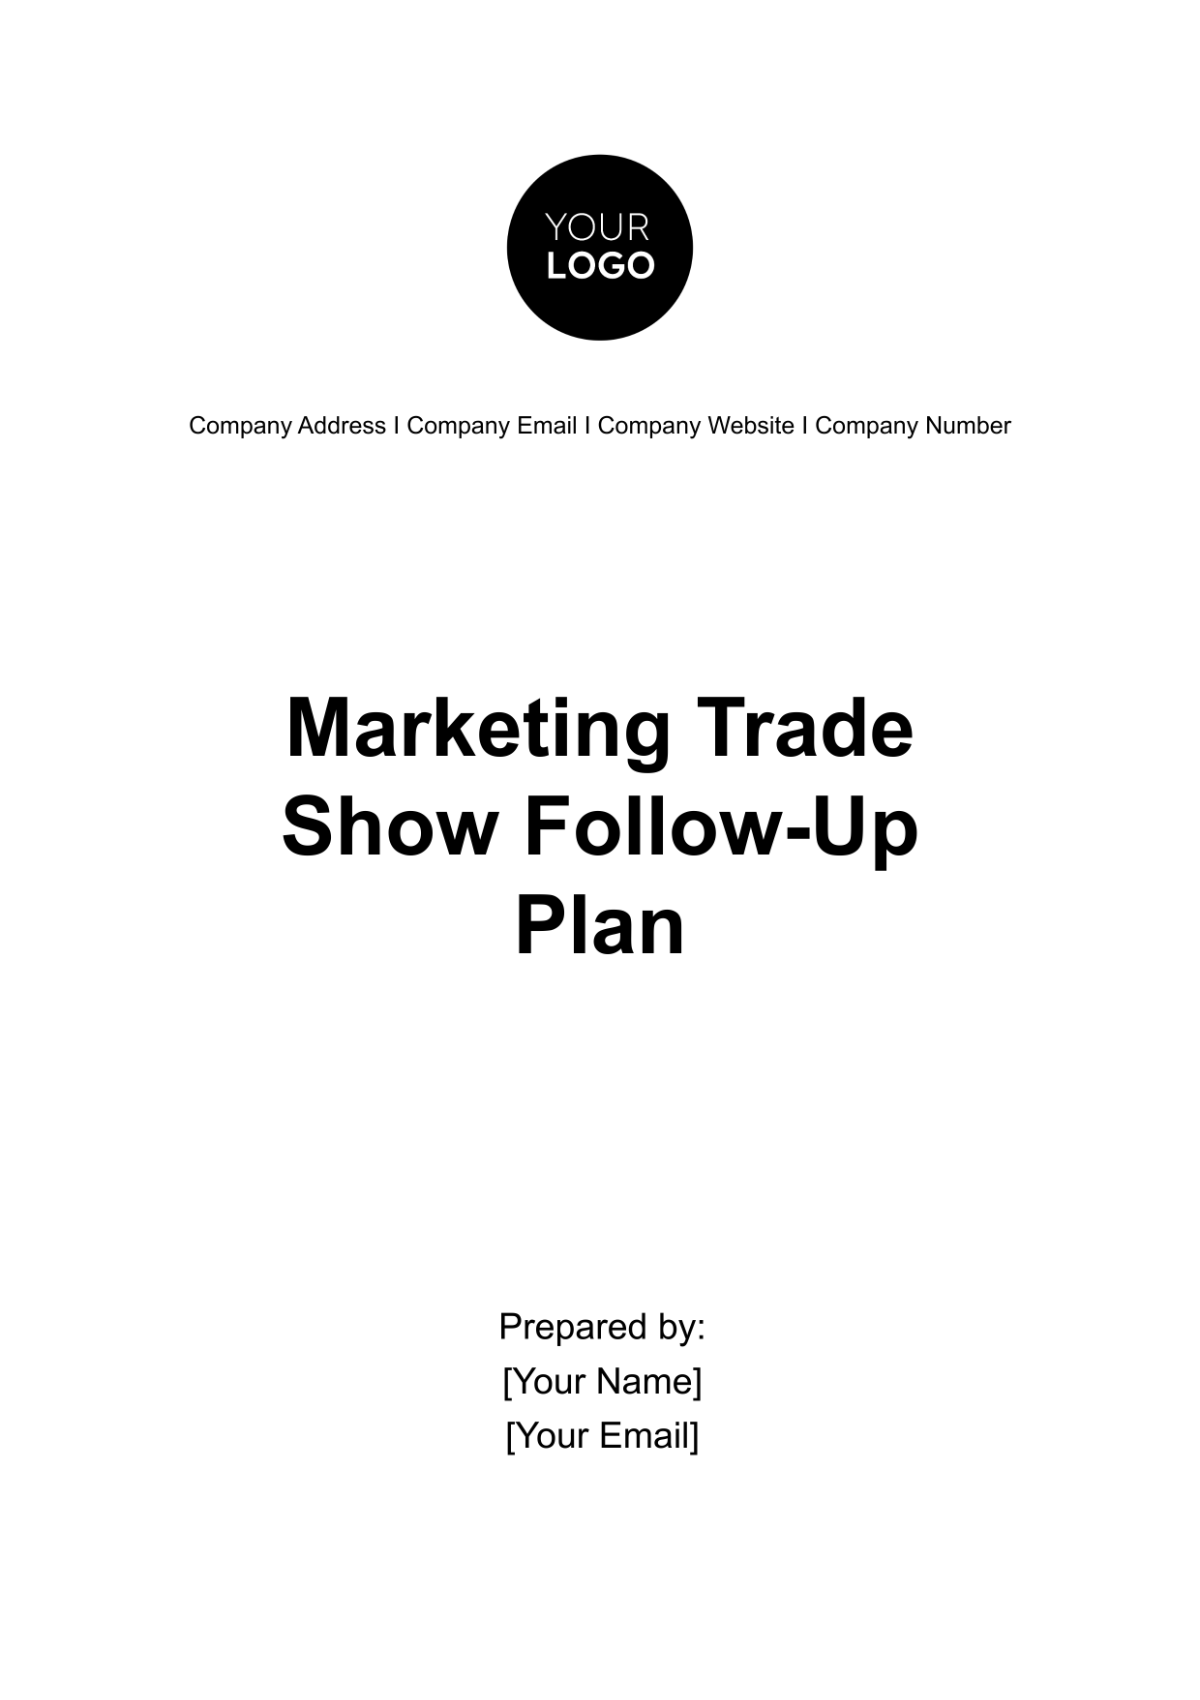 Marketing Trade Show Follow-up Plan Template